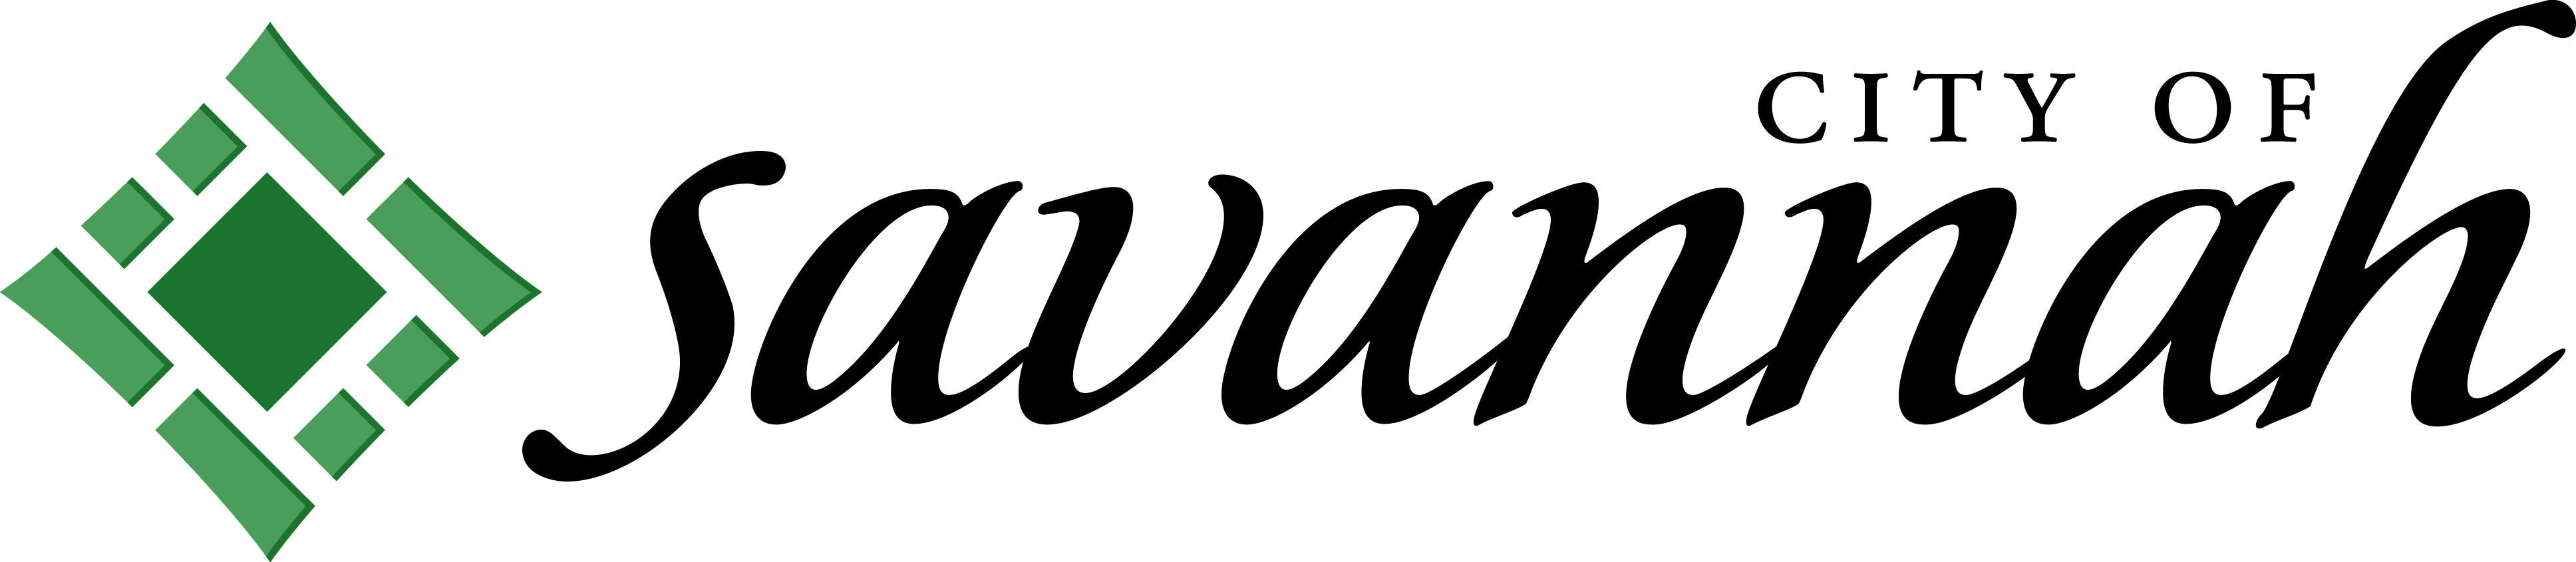 Savannah Logo - City of Savannah Location Permit Request Confirmation